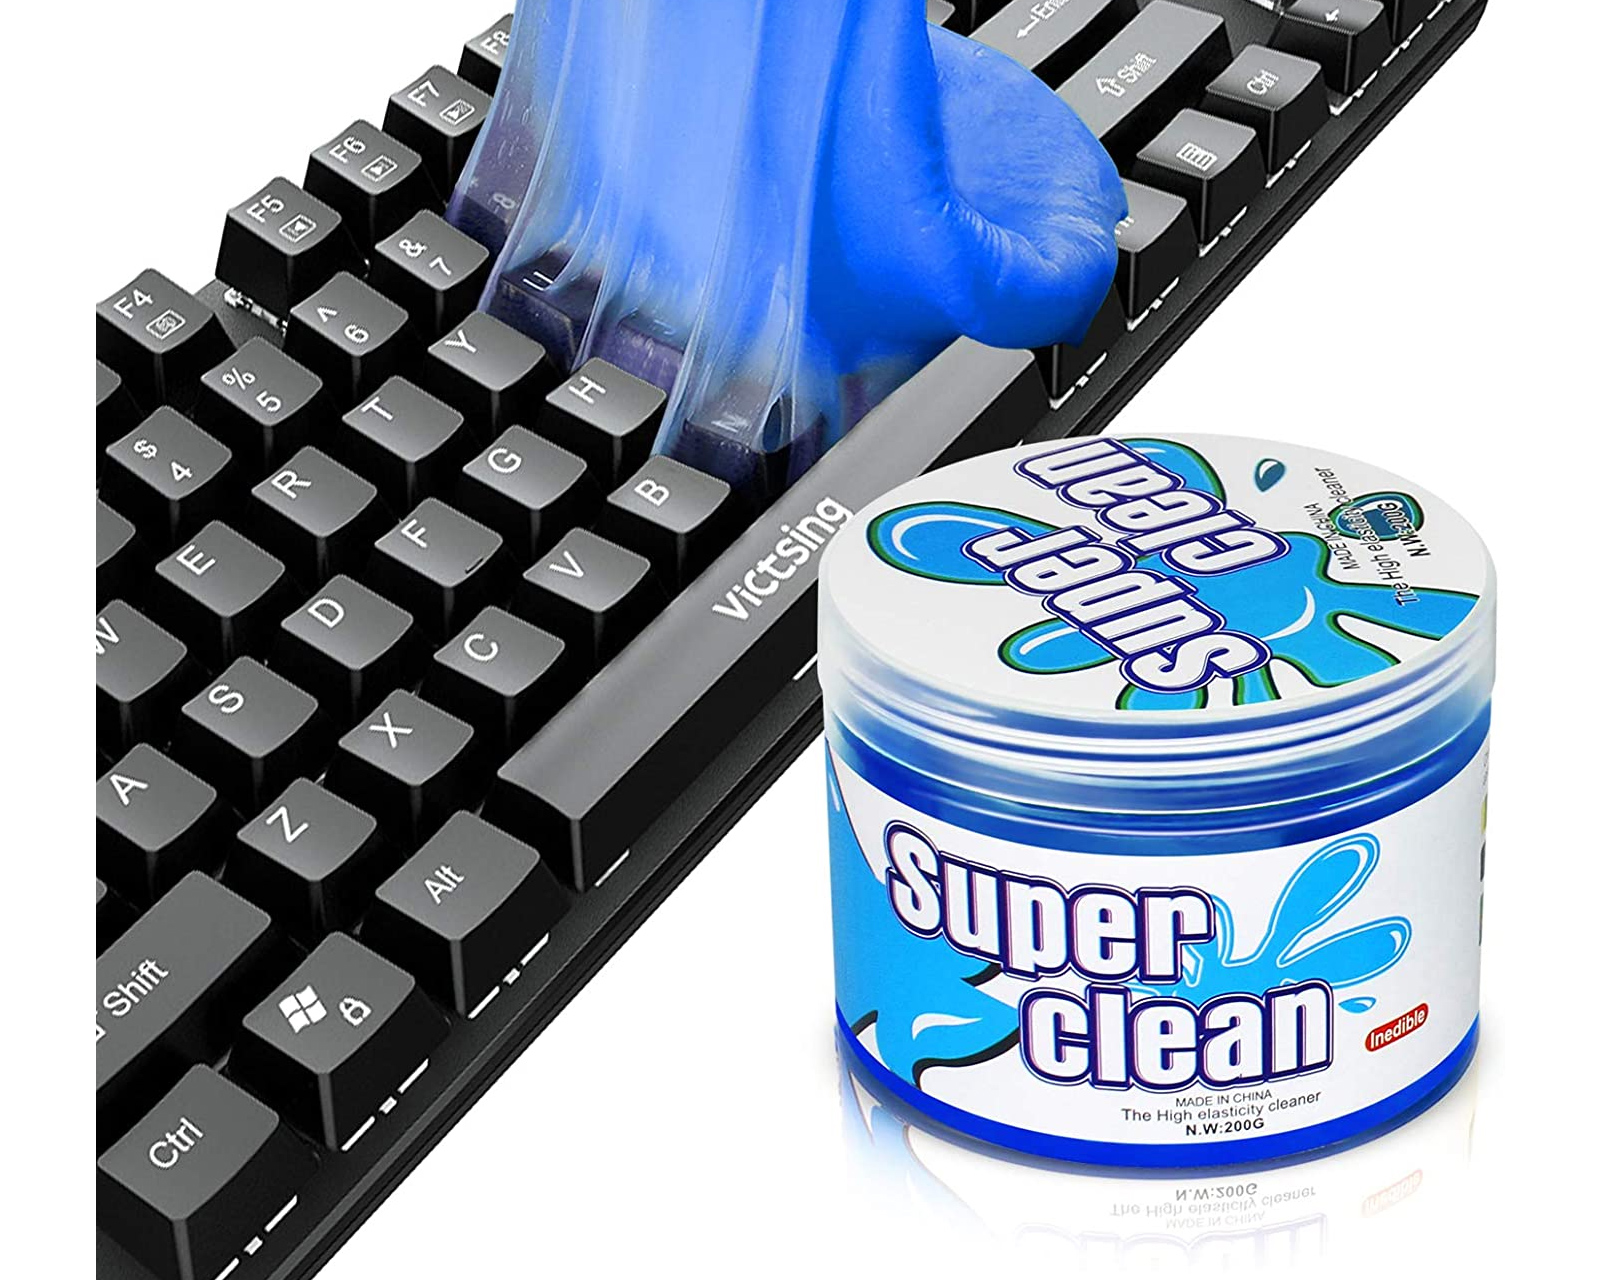 Super Clean Keyboard Cleaning Gel - In Use 